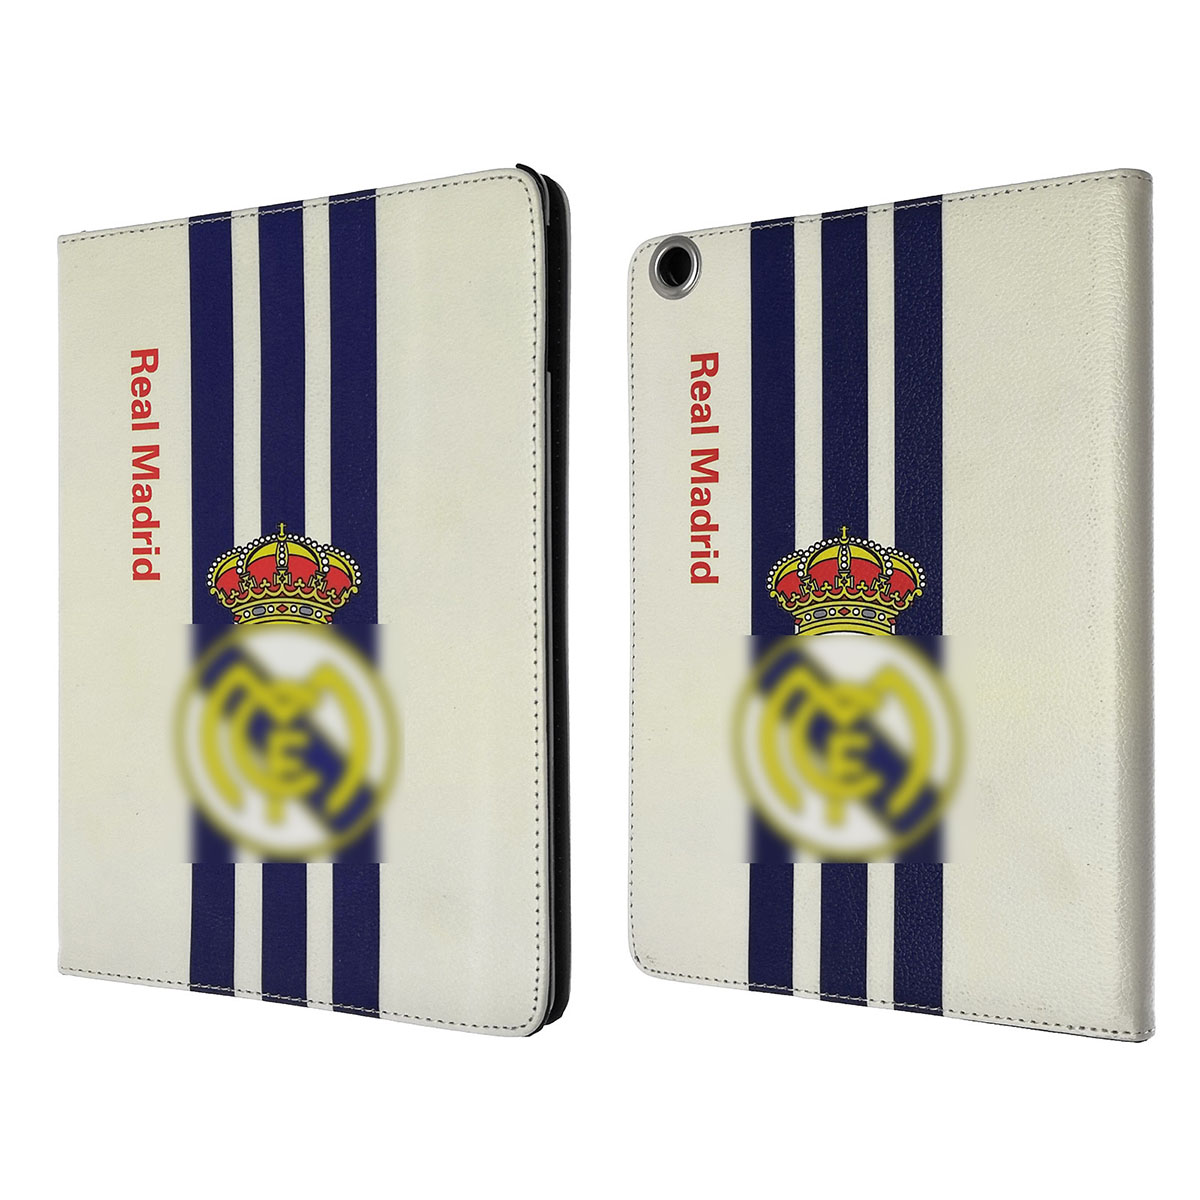 Чехол книжка для APPLE iPad Air, iPad 5, экокожа, пластик, рисунок ФК Реал Мадрид.